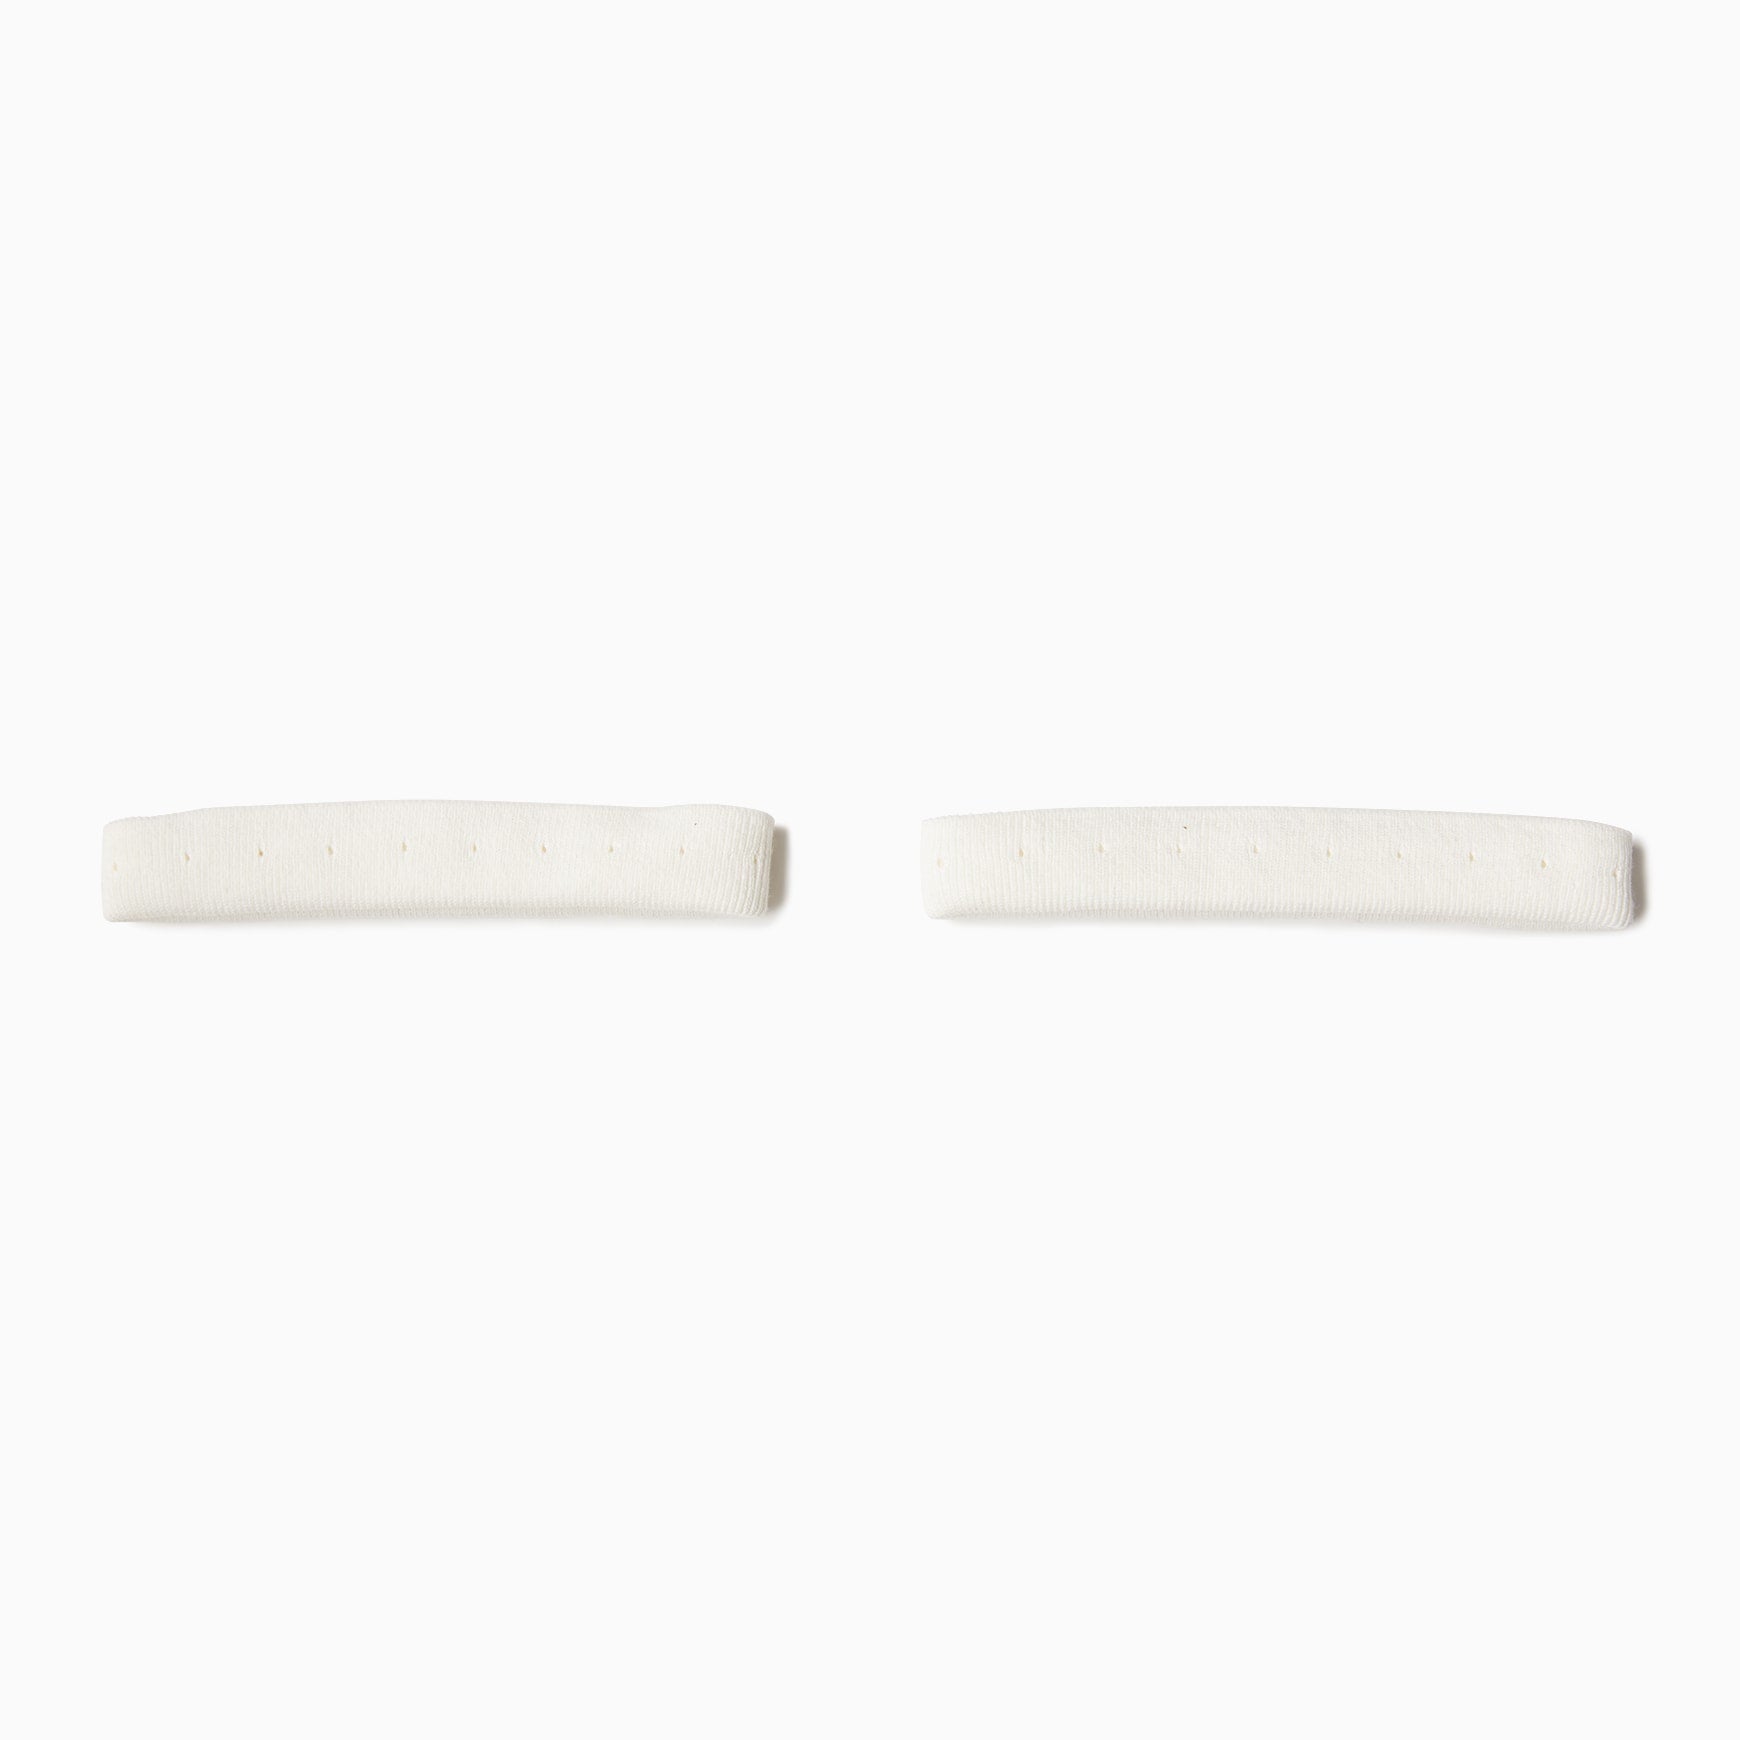 TYPE-1 Knit Half Sleeves Organic Cotton Sleeve Parts (White)